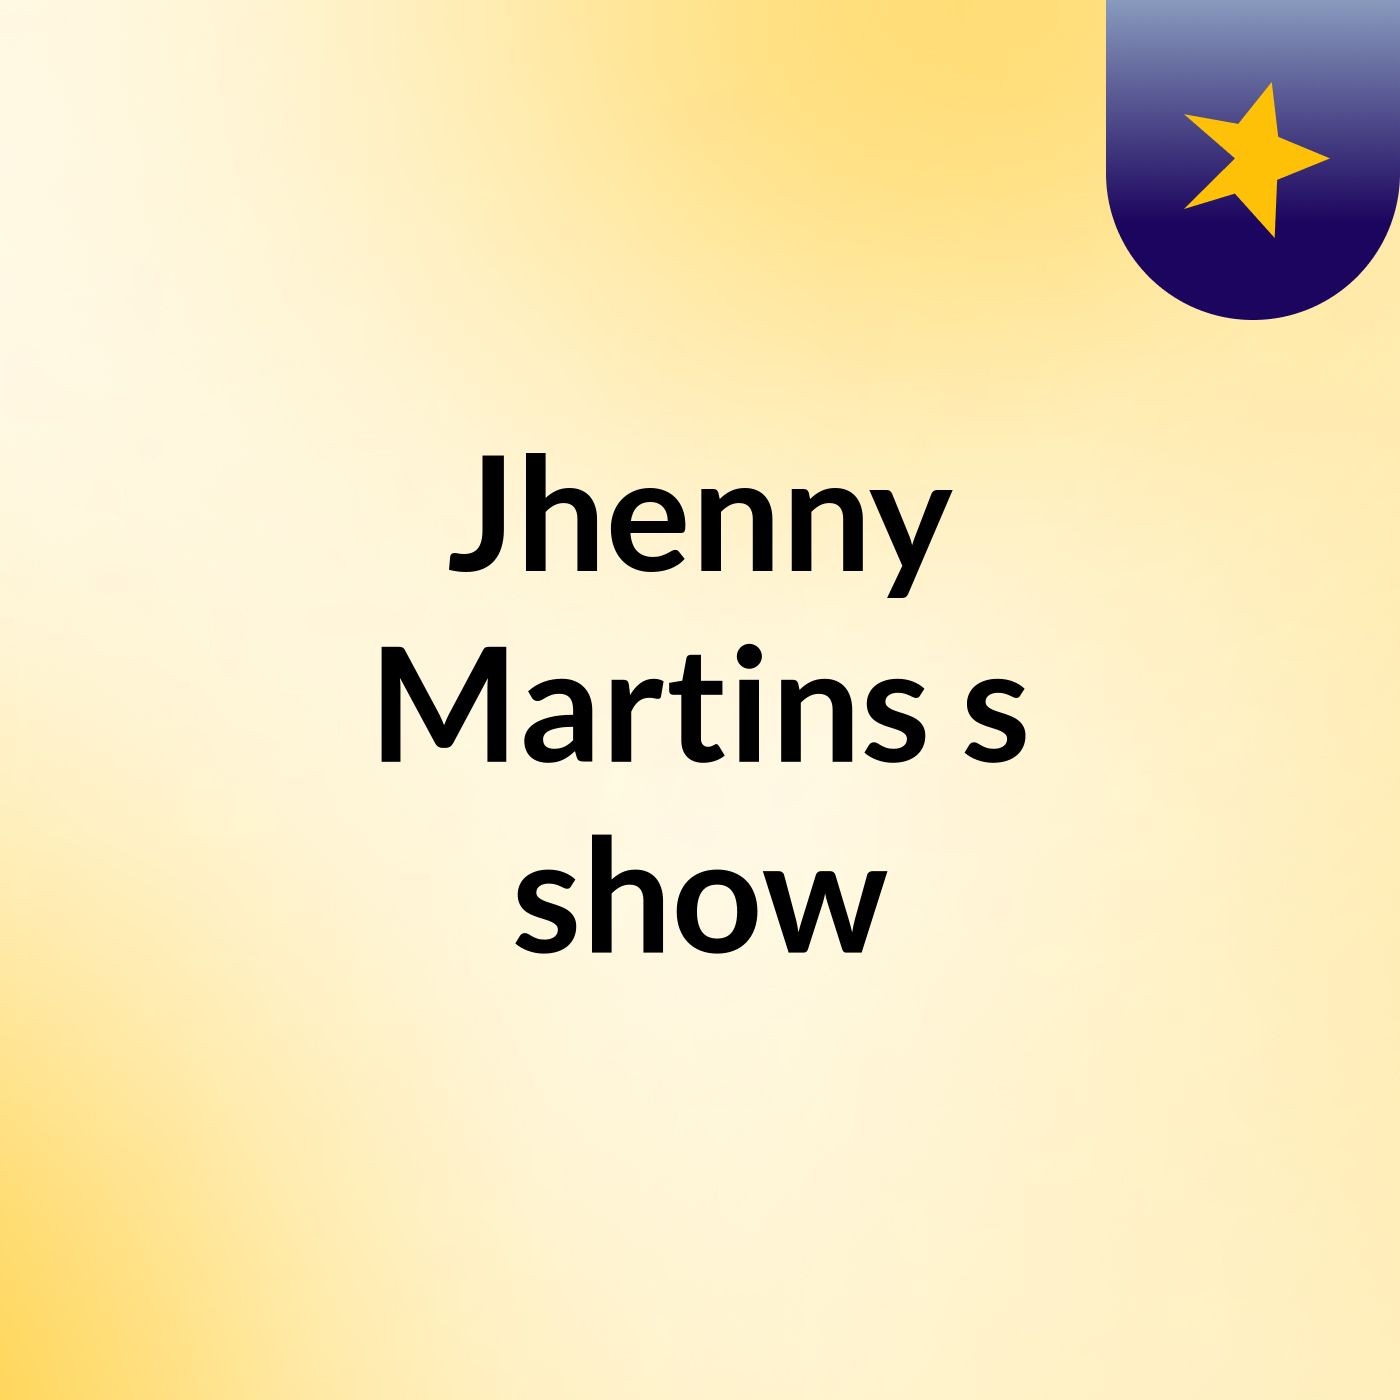 Jhenny Martins's show